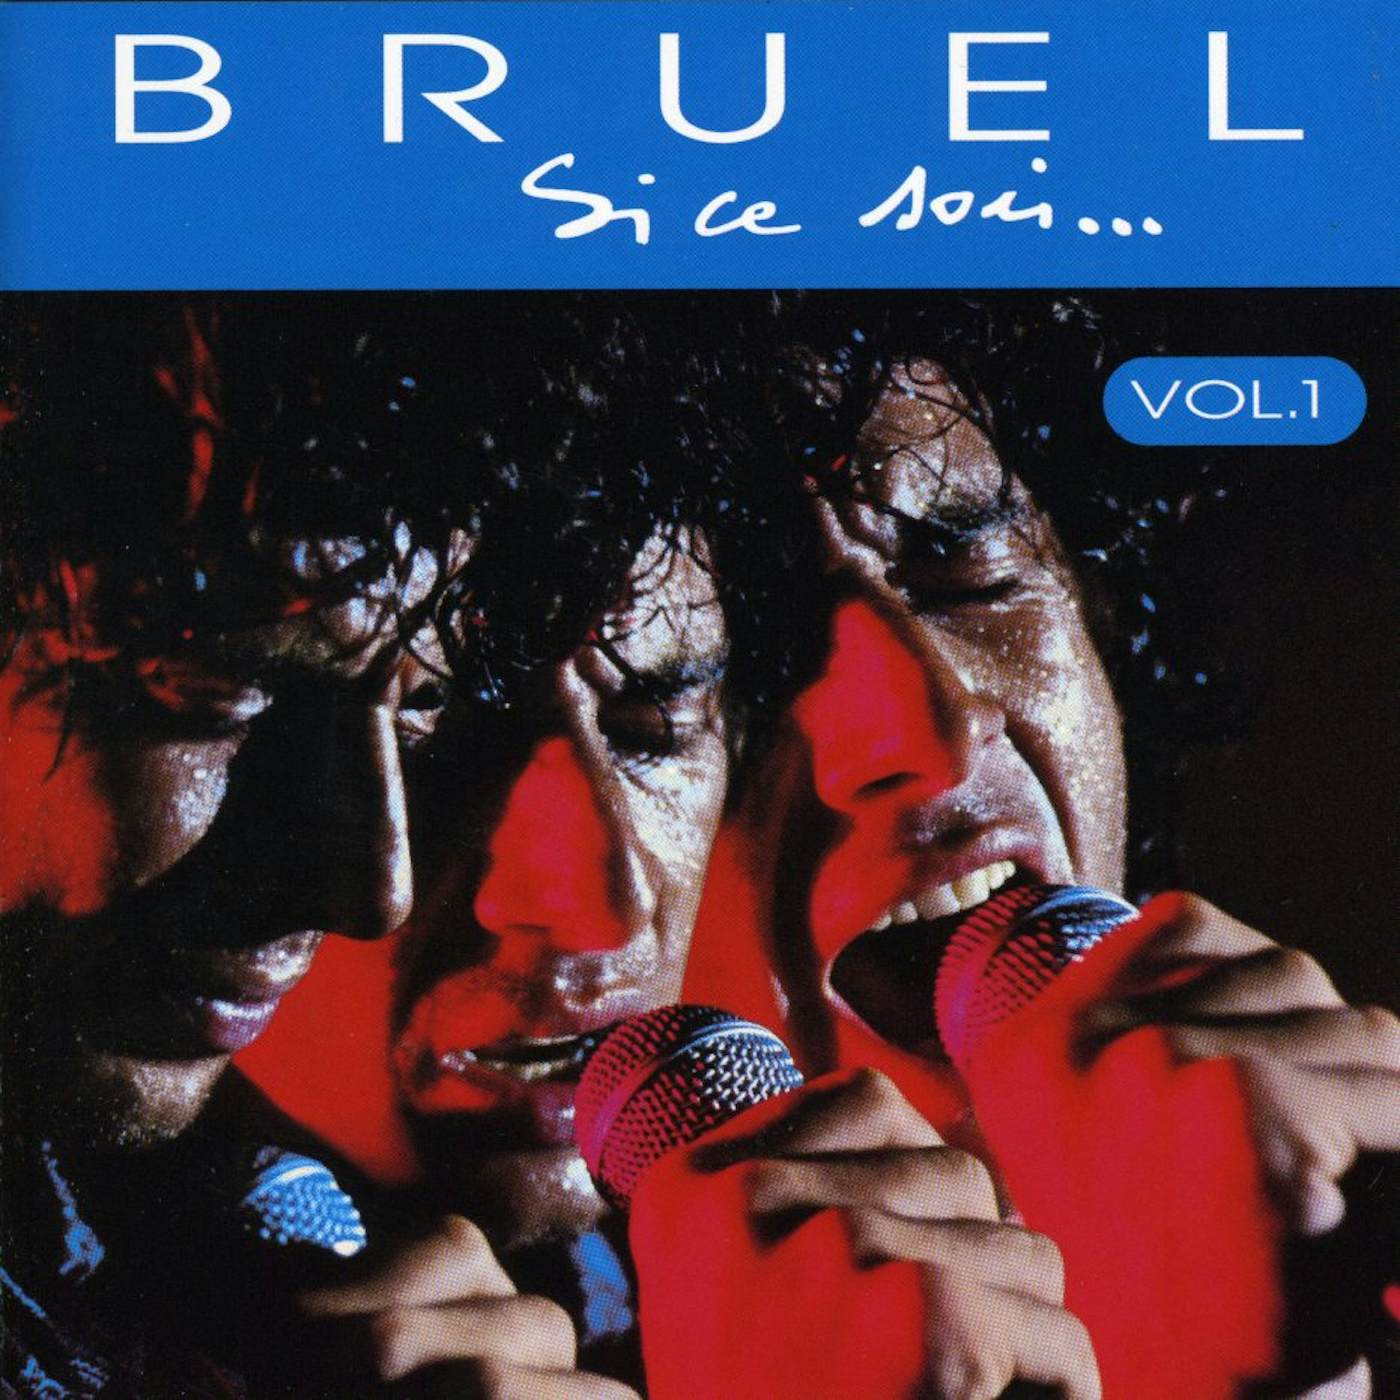 Best Of Patrick Bruel : Patrick Bruel: : CD et Vinyles}